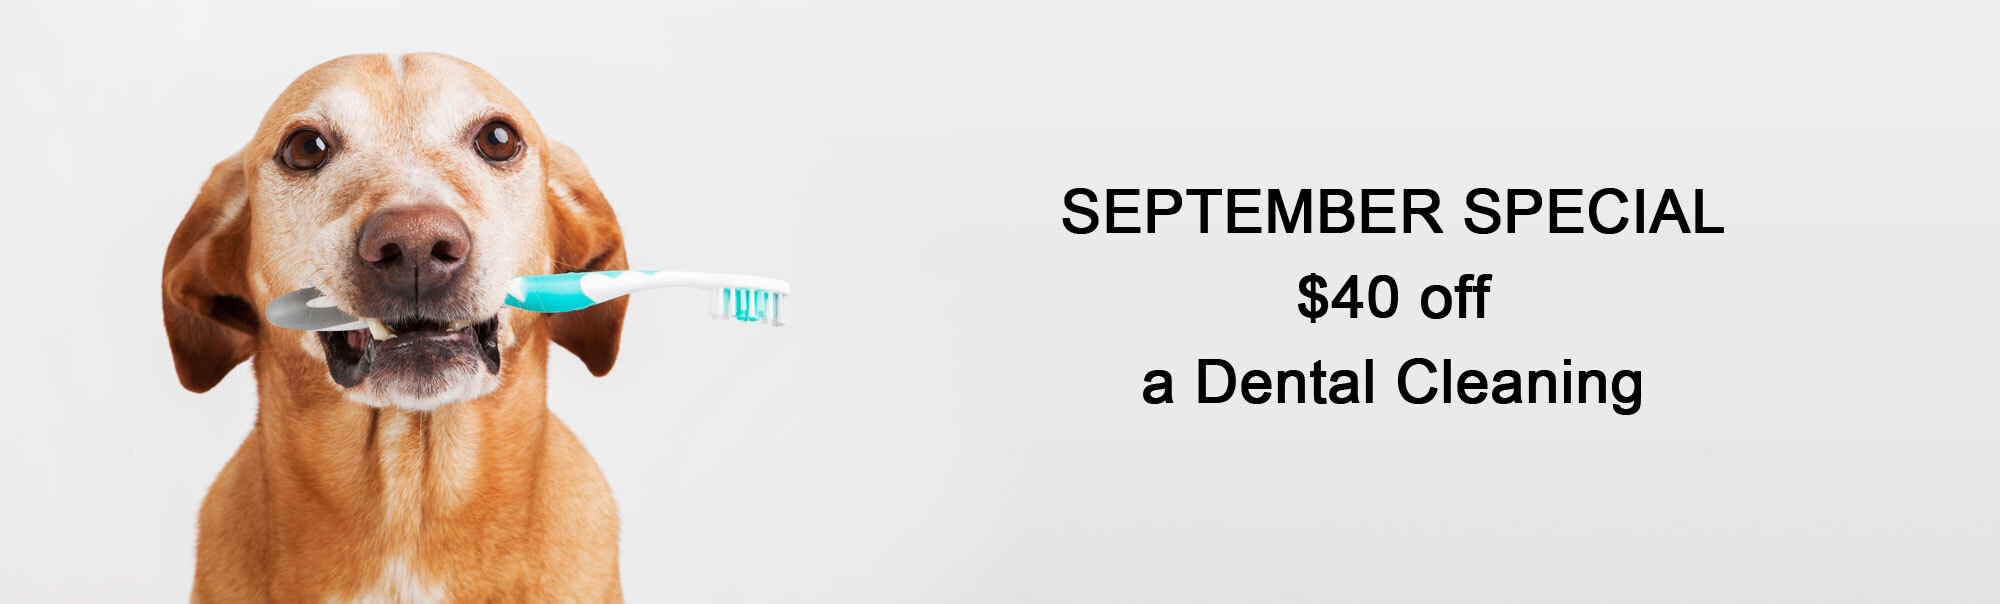 September Dental Special